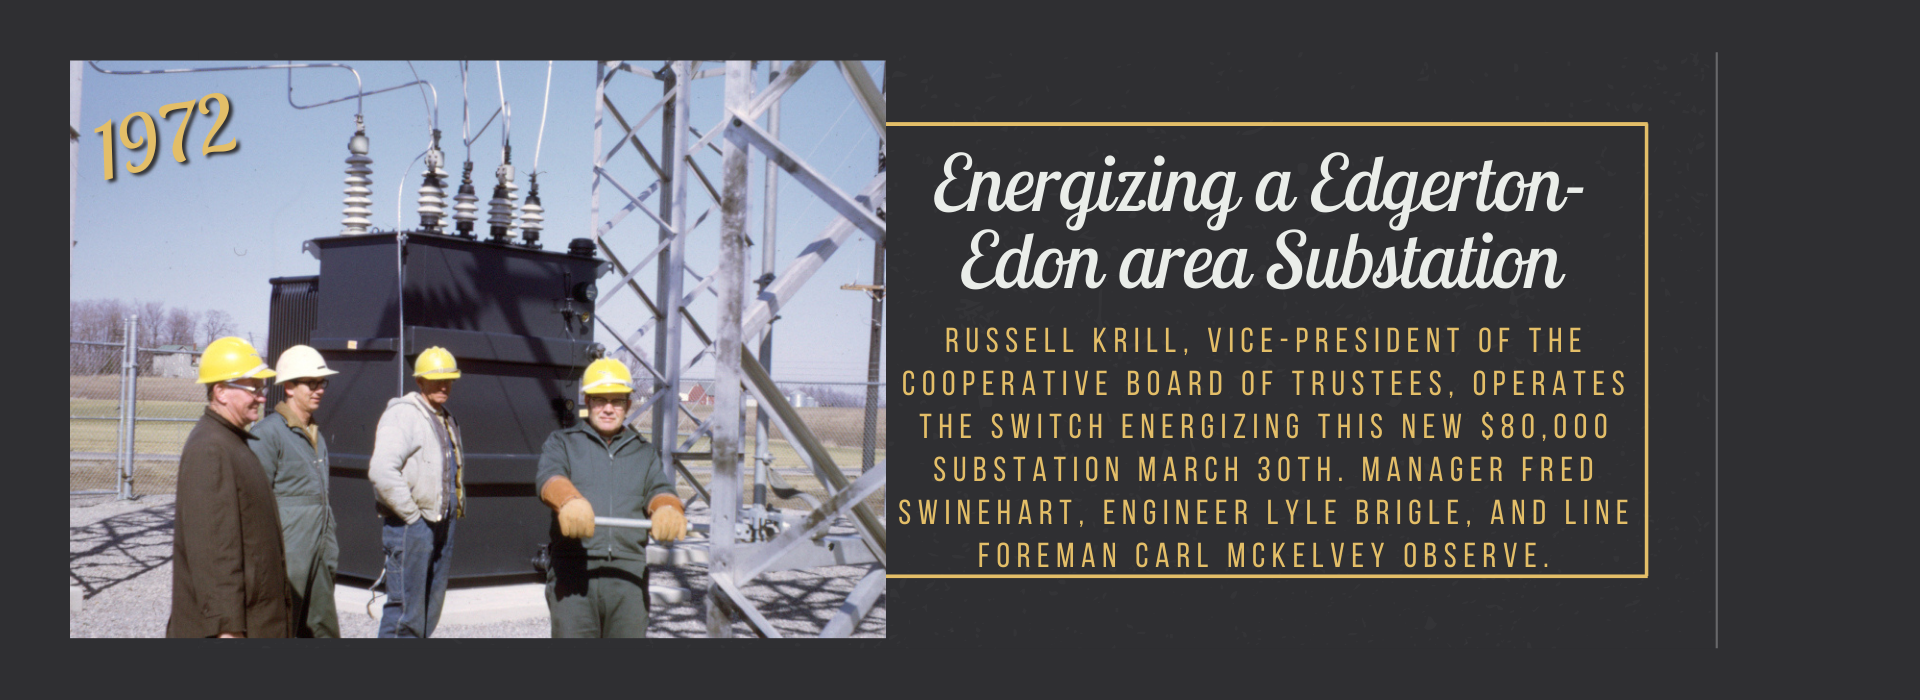 Energizing a Edgerton-Edon area Substation